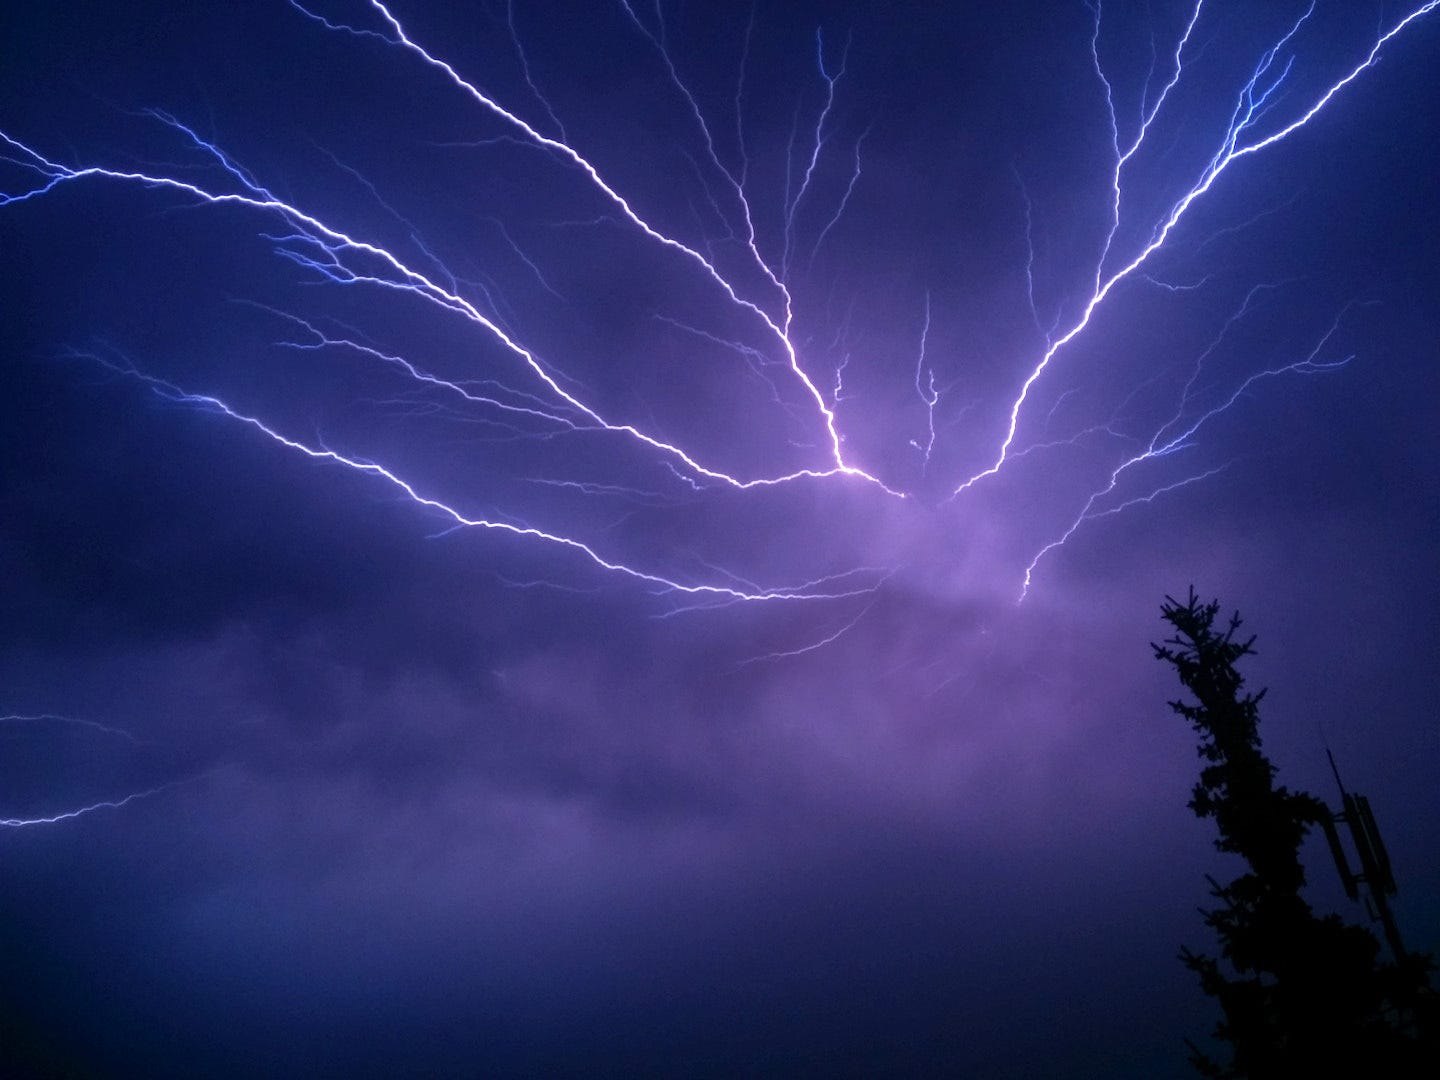 File:Lightning Storm (115334089).jpeg - Wikimedia Commons